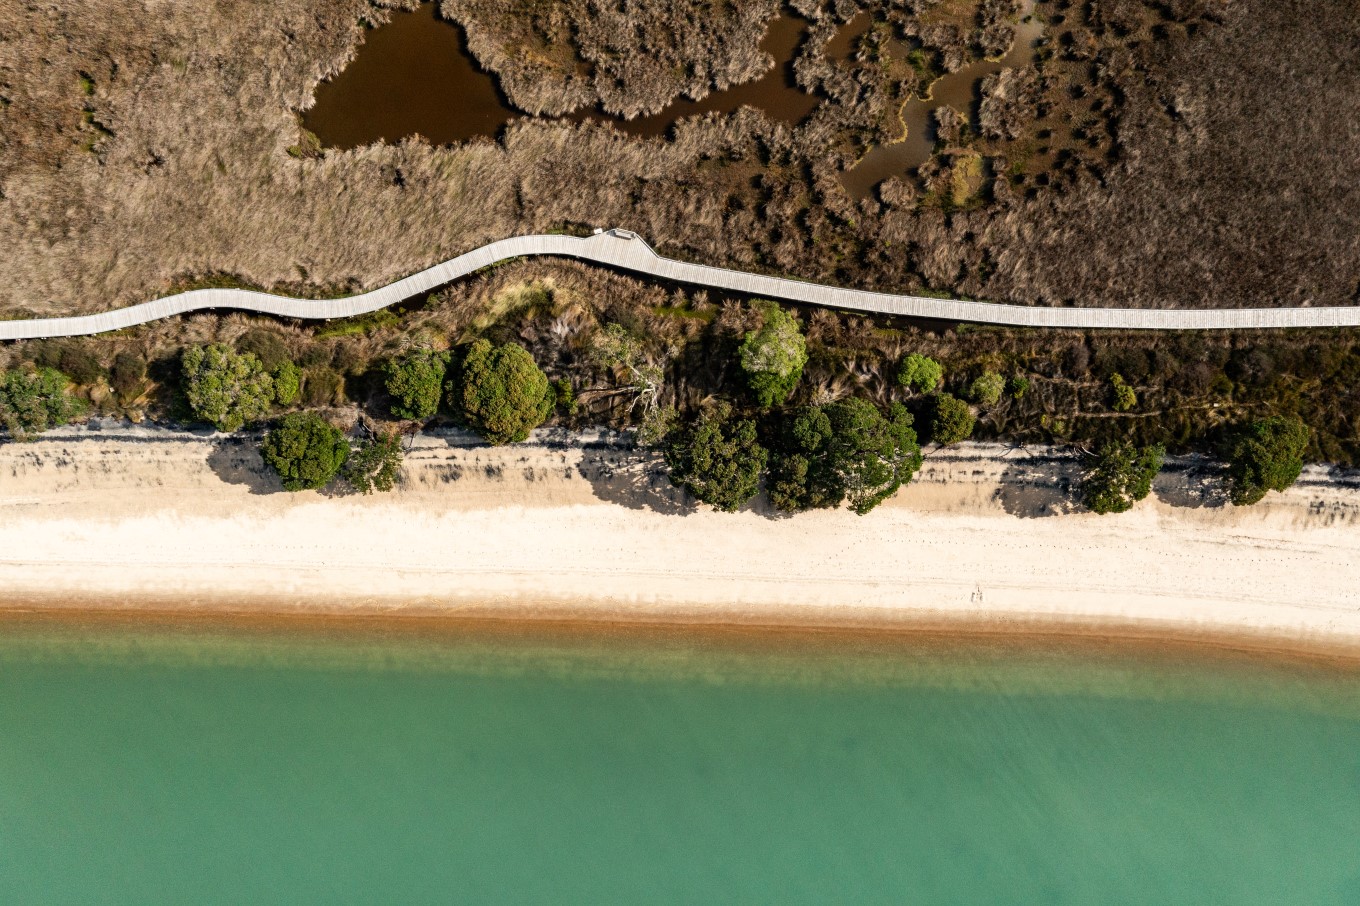 The boardwalk at Āwhitu Regional Park offers views of the wetlands and white sand beaches of Kauritūtahi Beach.